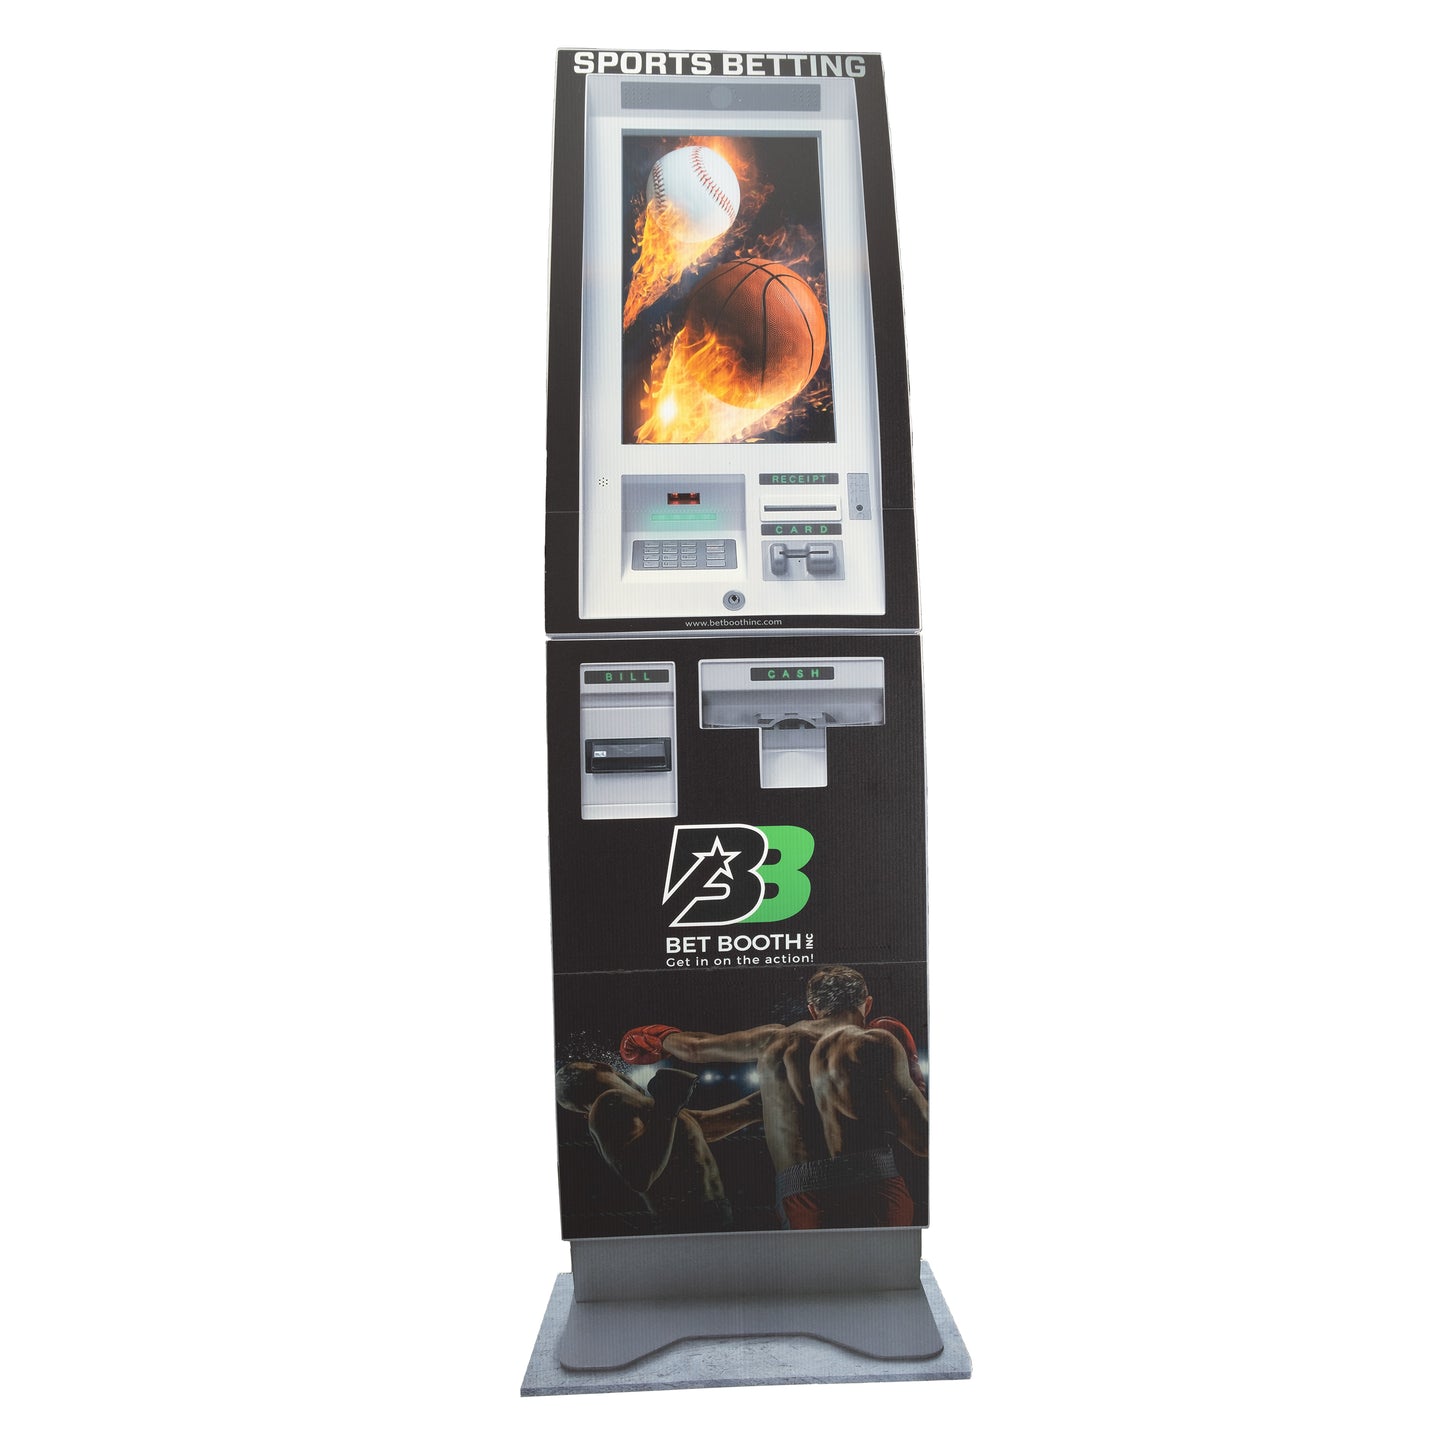 ATM/Kiosk Standee